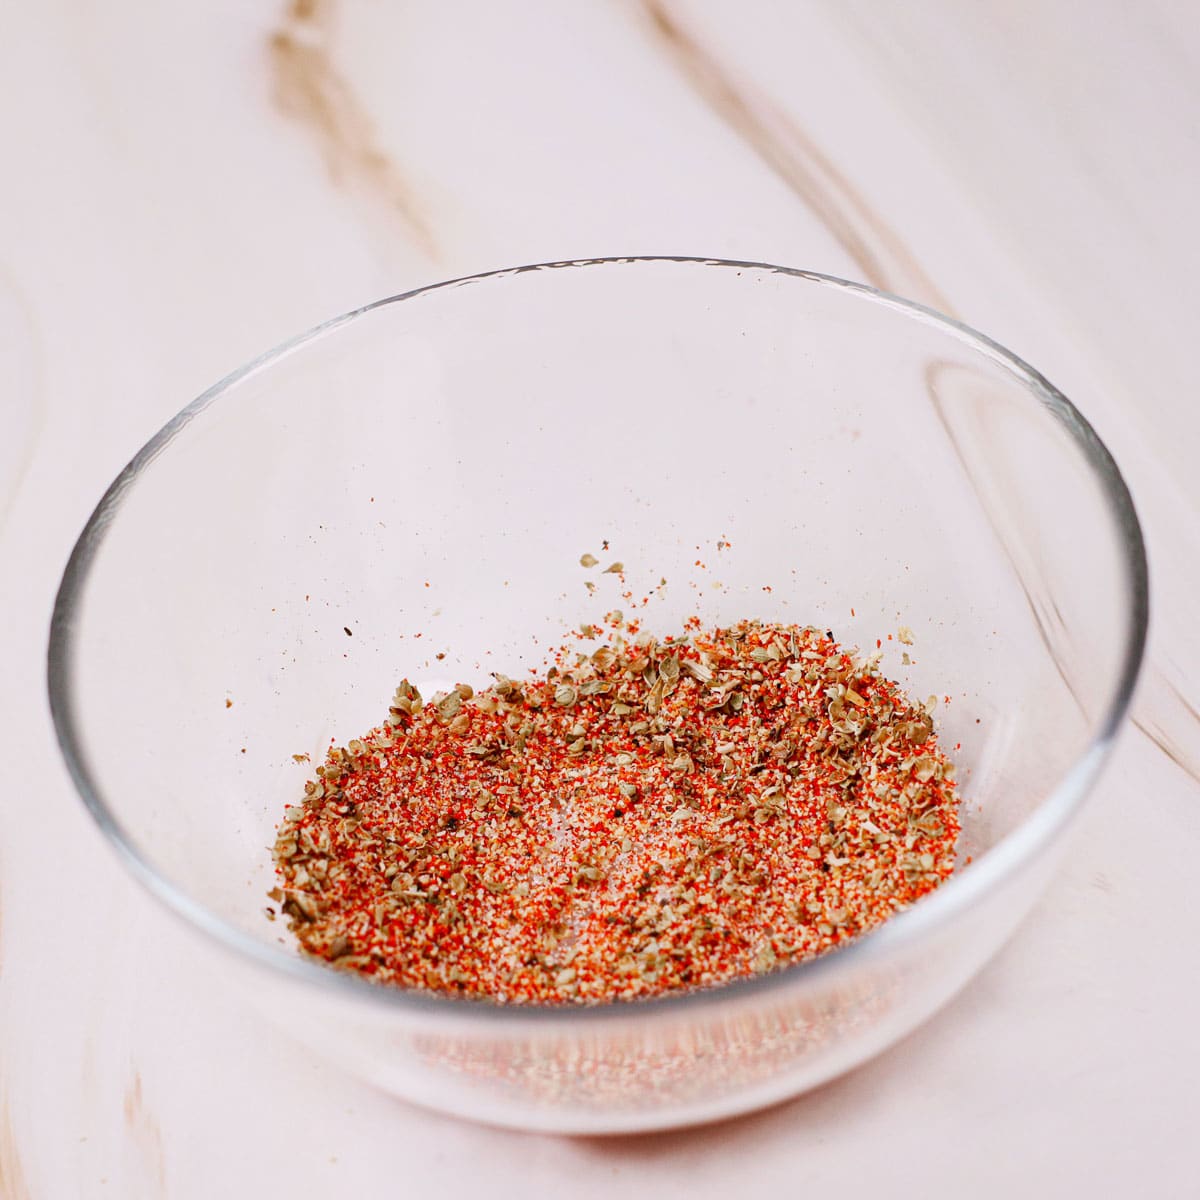 Dry rub mixture: salt, paprika, garlic powder, black pepper, dried oregano, cayenne pepper, and sugar.